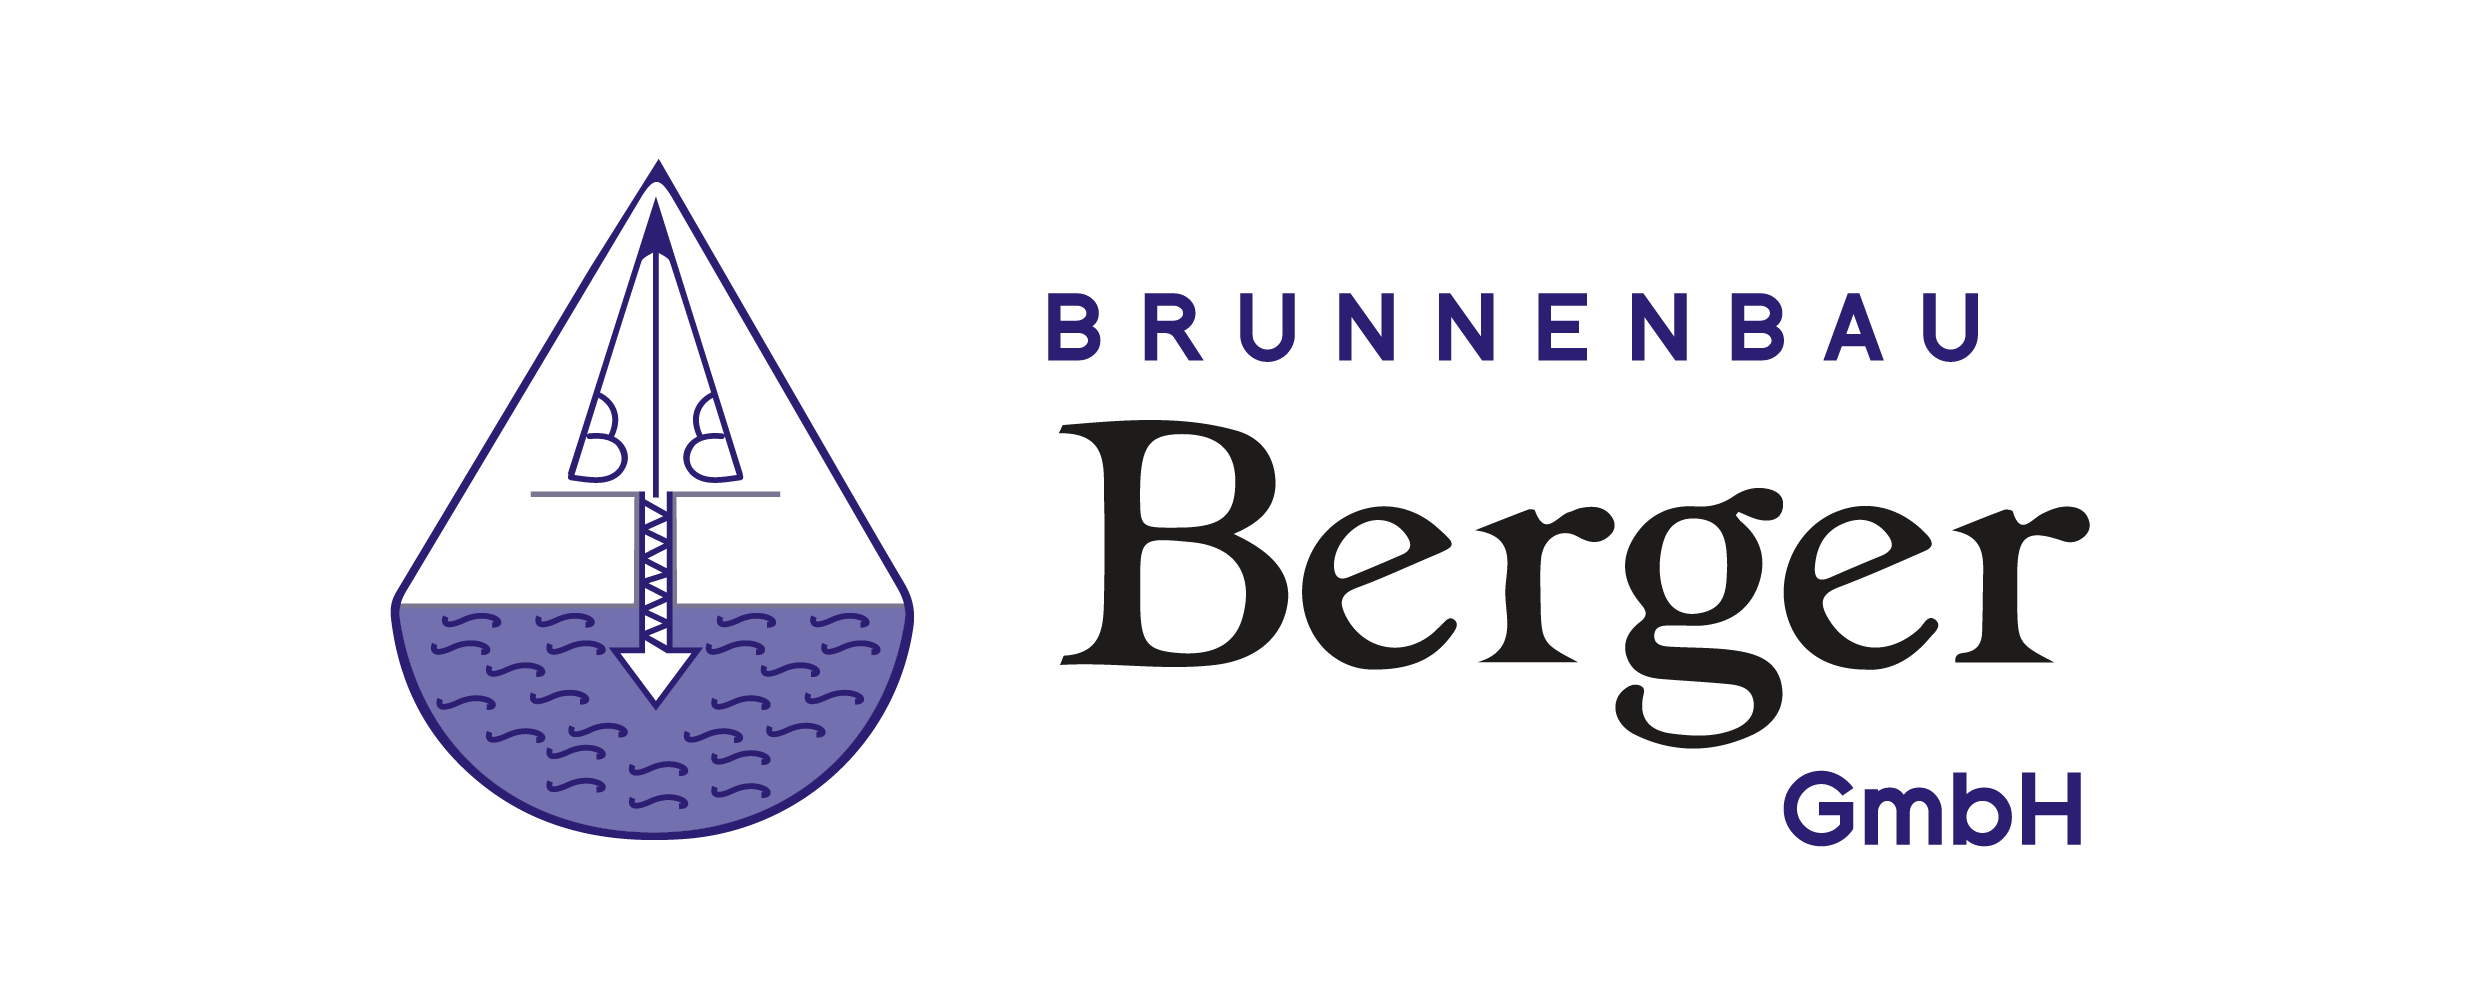 Brunnenbau Berger GmbH